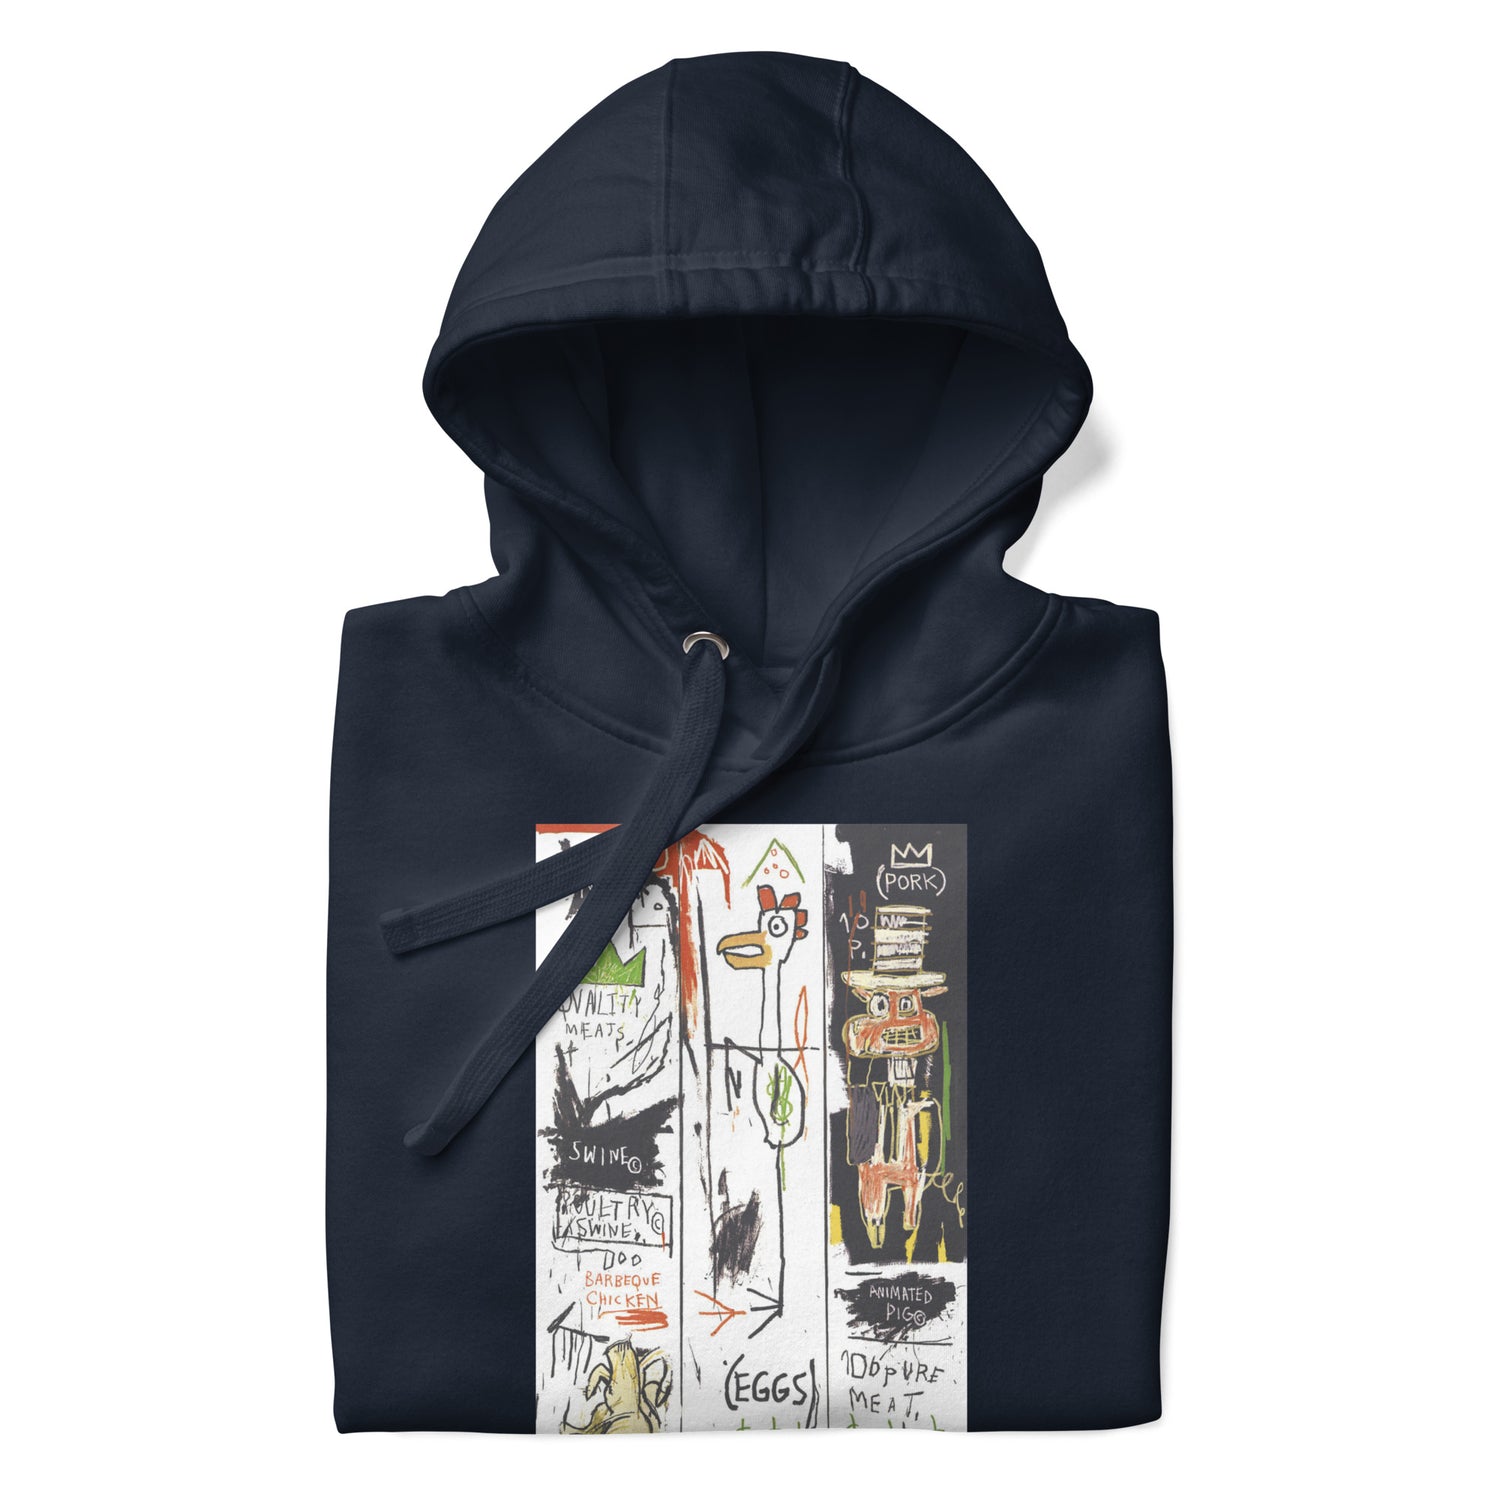 Jean-Michel Basquiat "Quality Meats for the Public" 1982 Artwork Printed Premium Streetwear Sweatshirt Hoodie Navy Blue